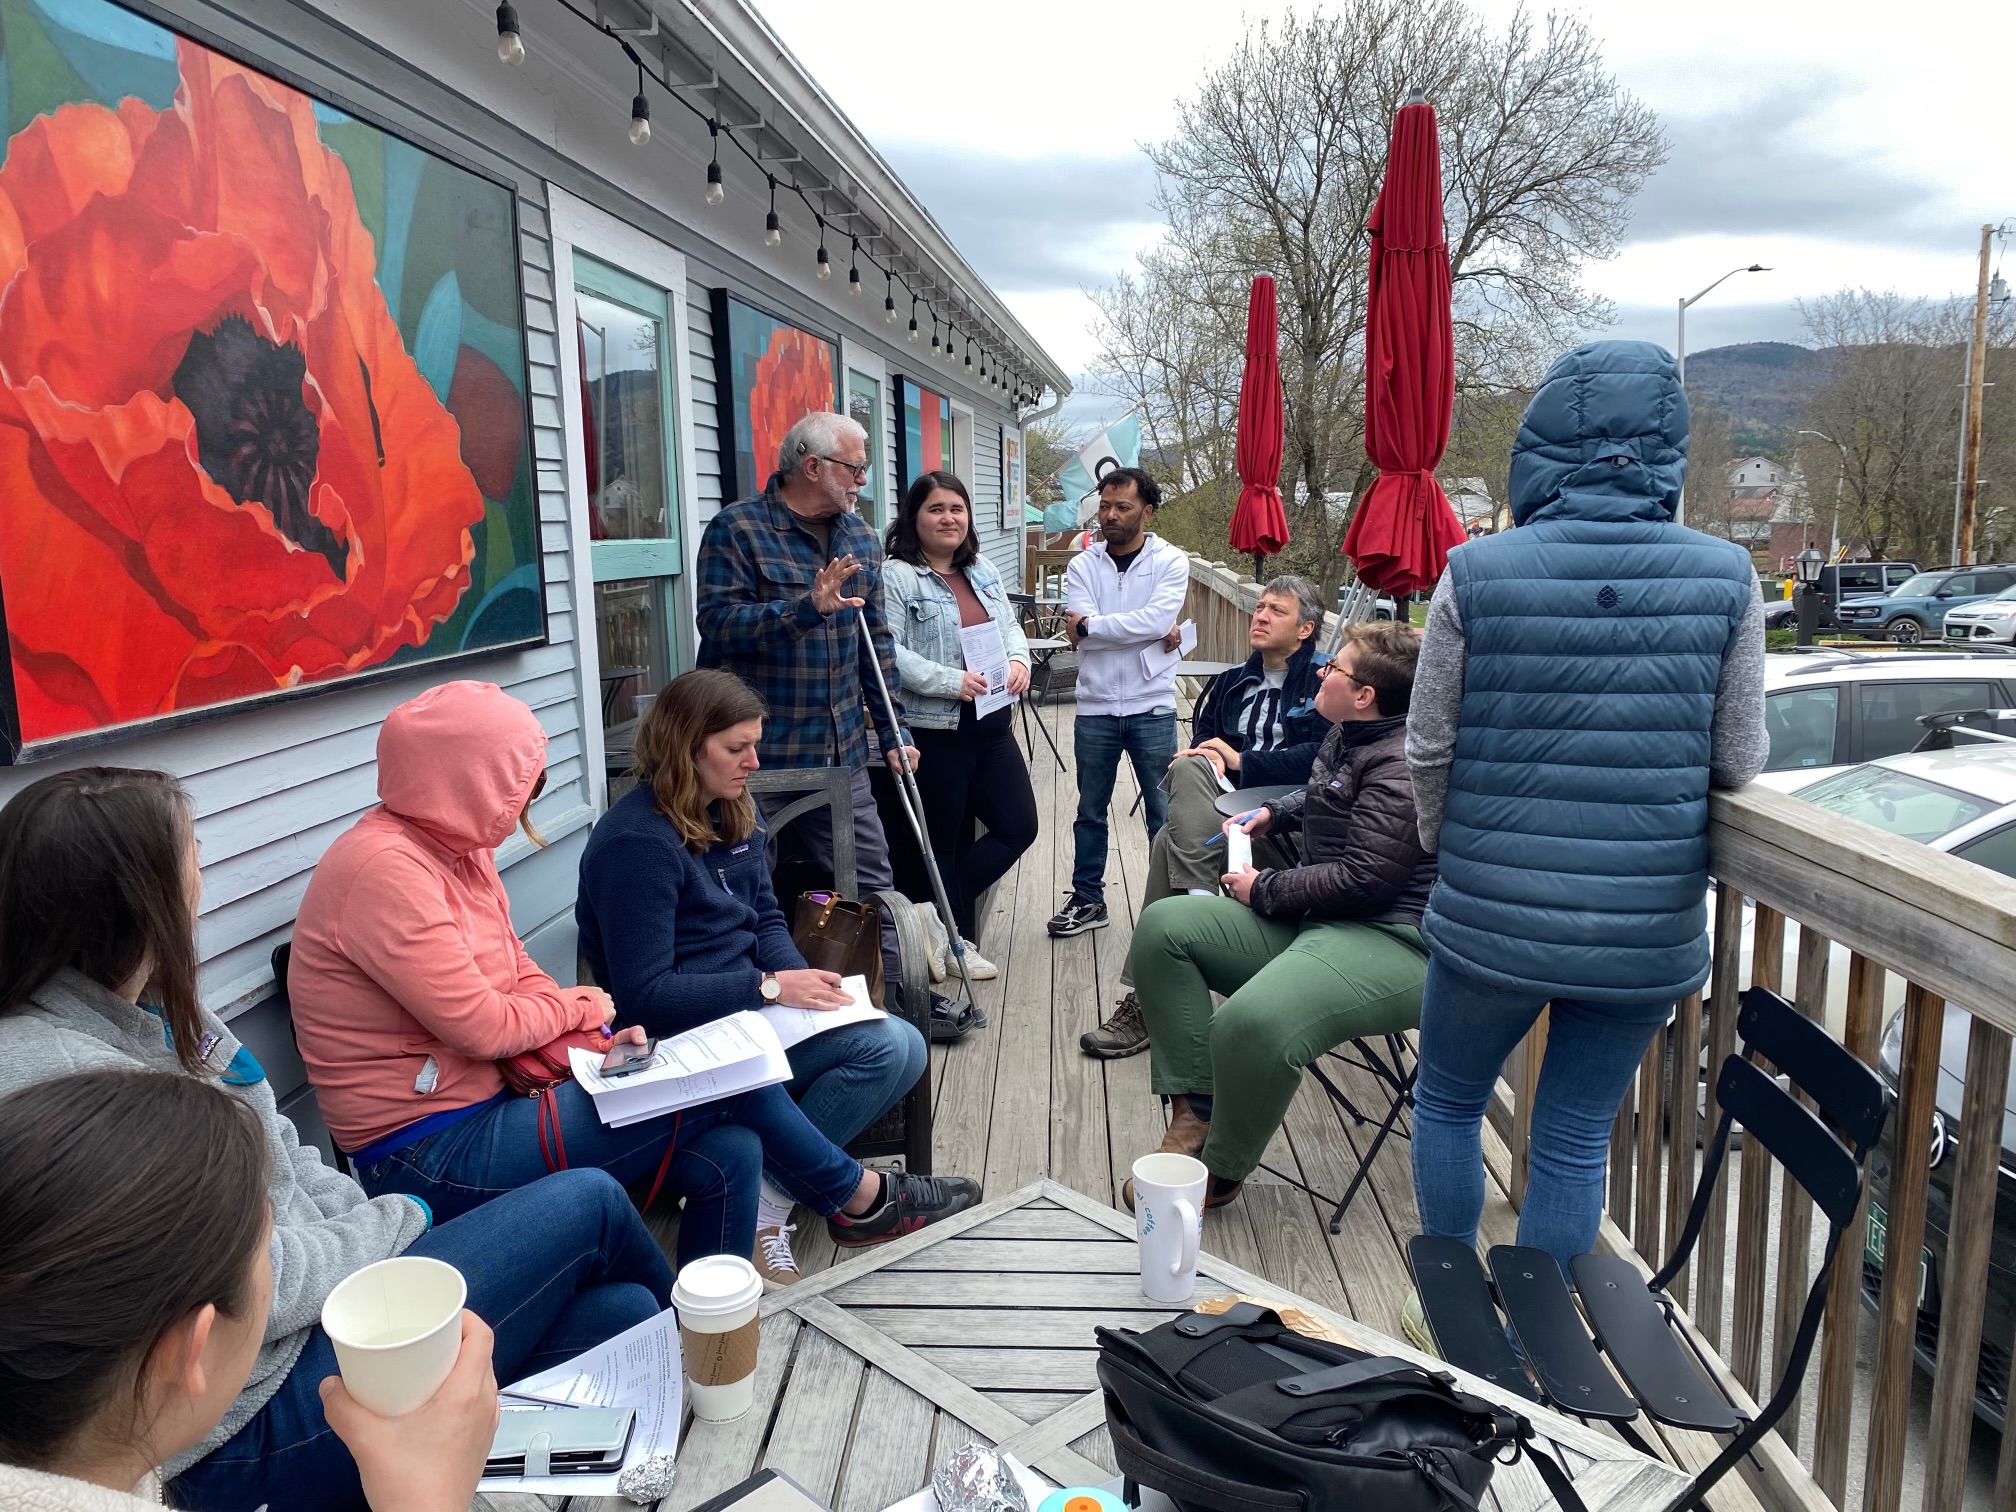 A group of WAARC members meeting on the deck at Stowe Street Cafe in downtown Waterbury, VT